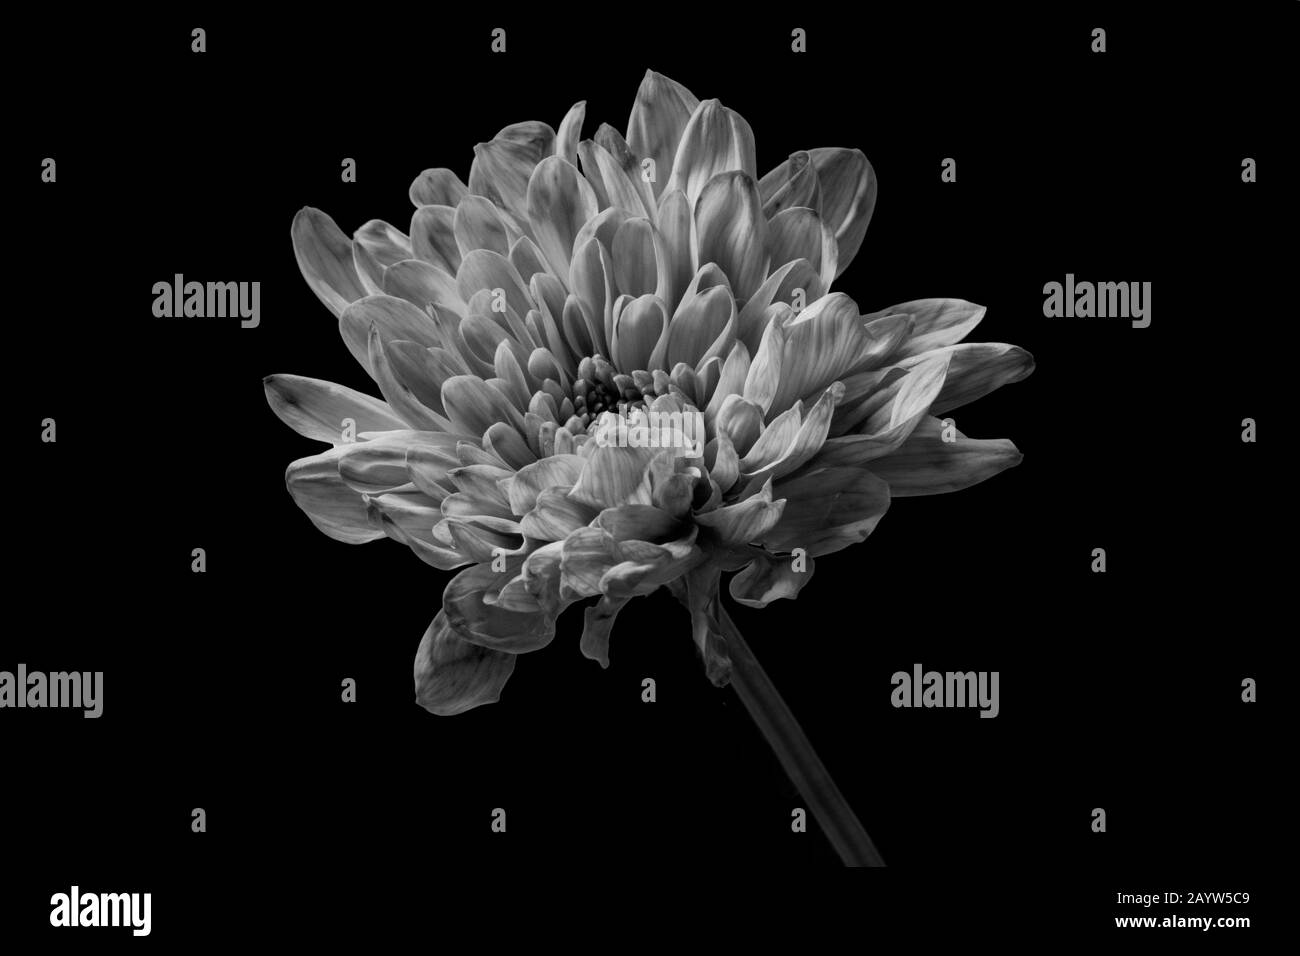 Chrysanthemum bianco e nero su sfondo nero. Foto Stock